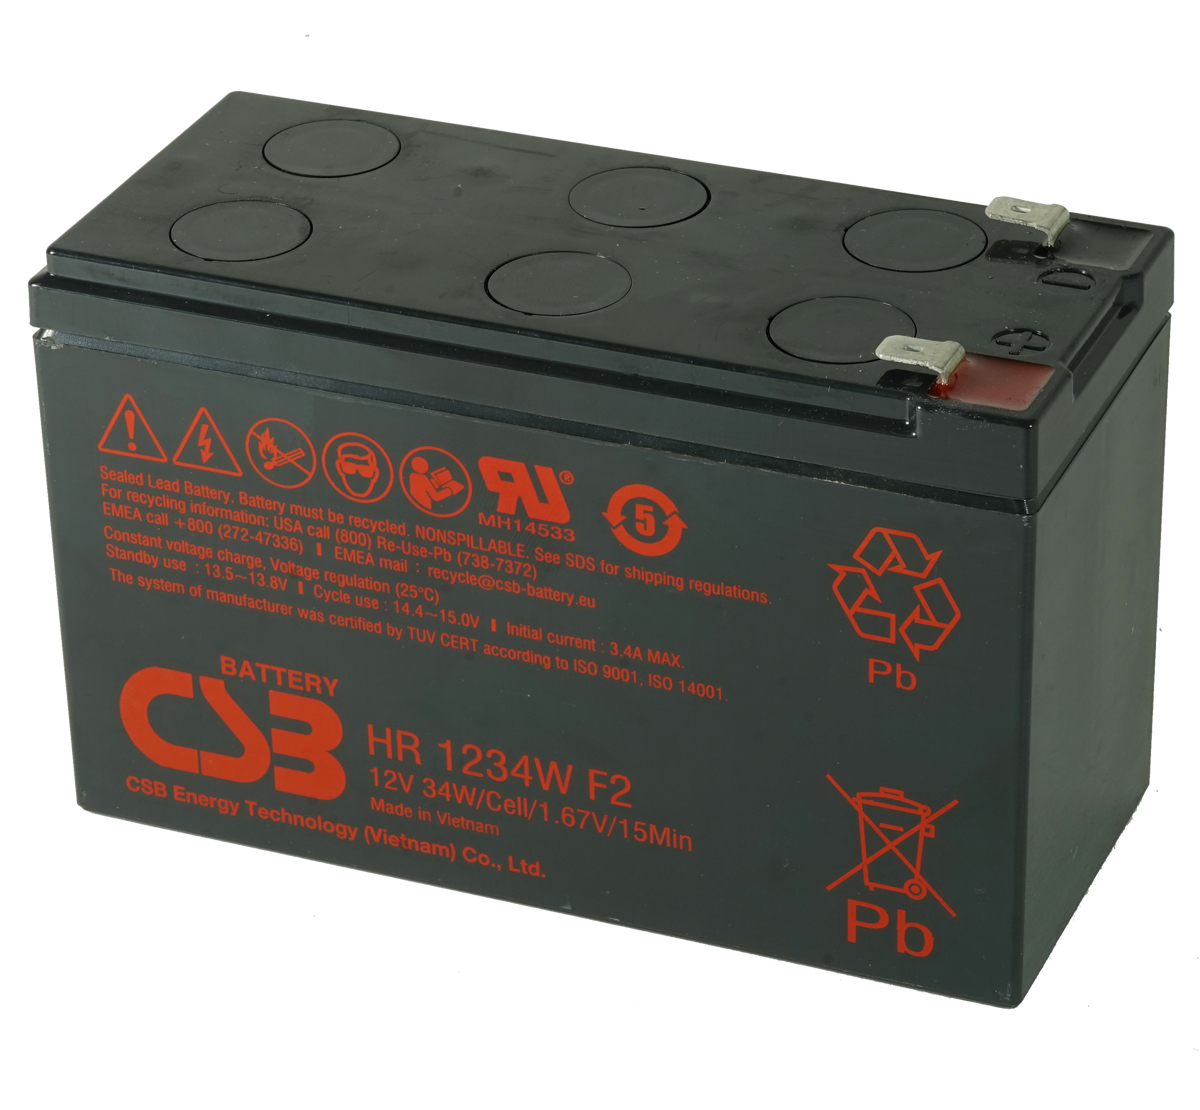 MDS68765 UPS Battery Kit for MGE / Eaton UPS